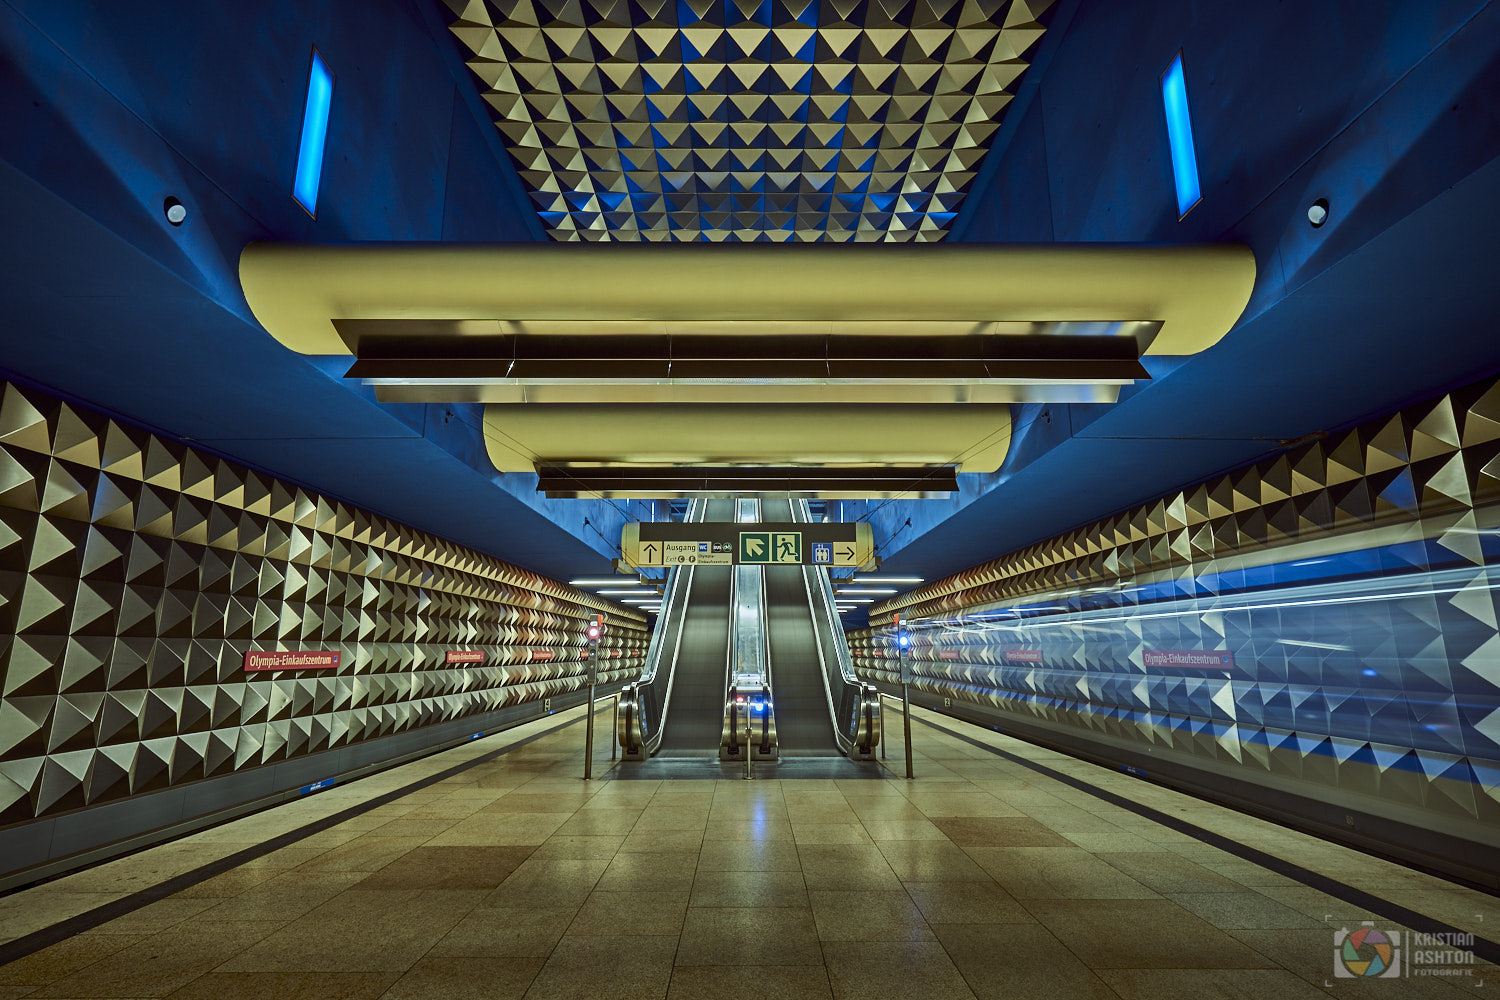 U-Bahn Haltestelle Olympia-Einkaufszentrum